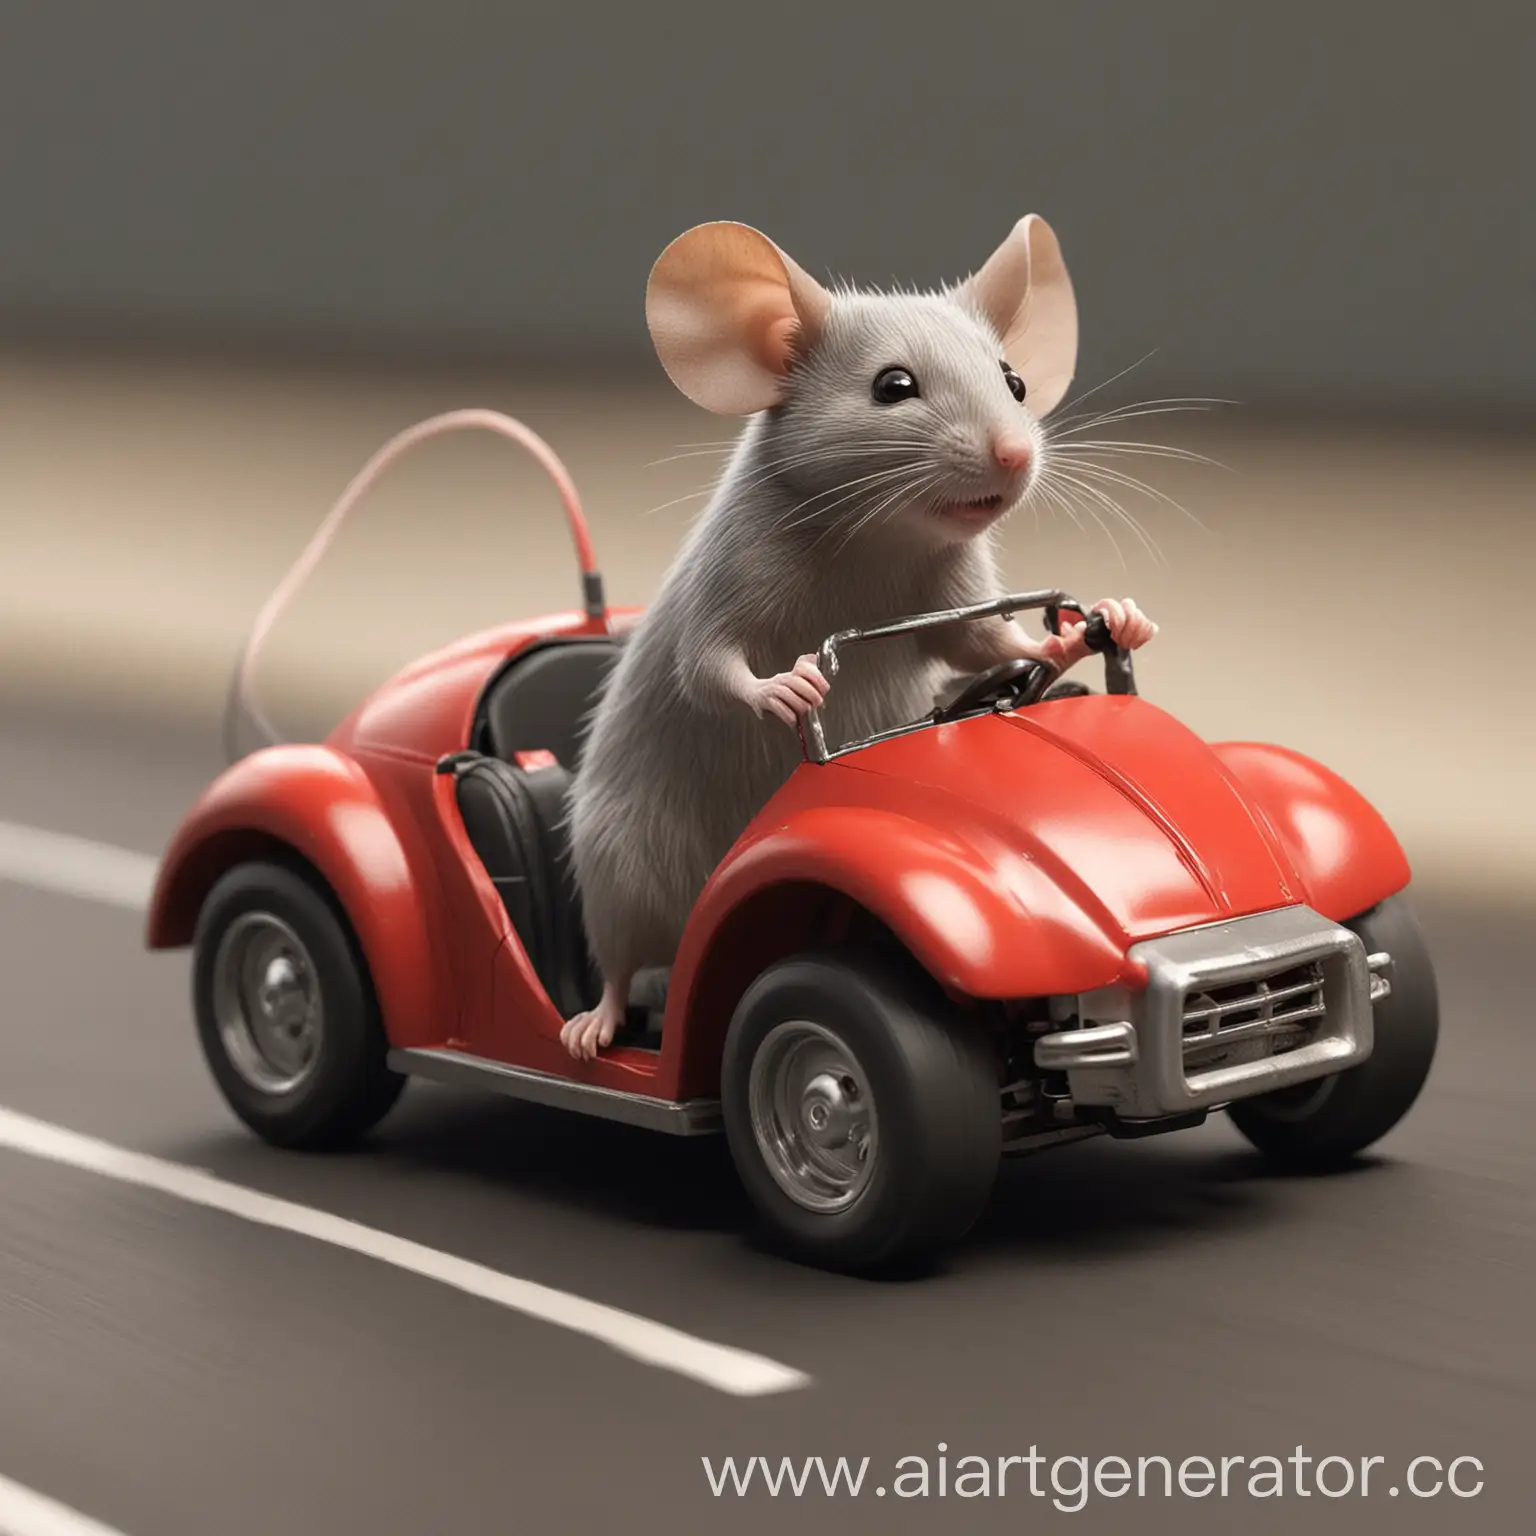 Крыса едет на машине за рулём